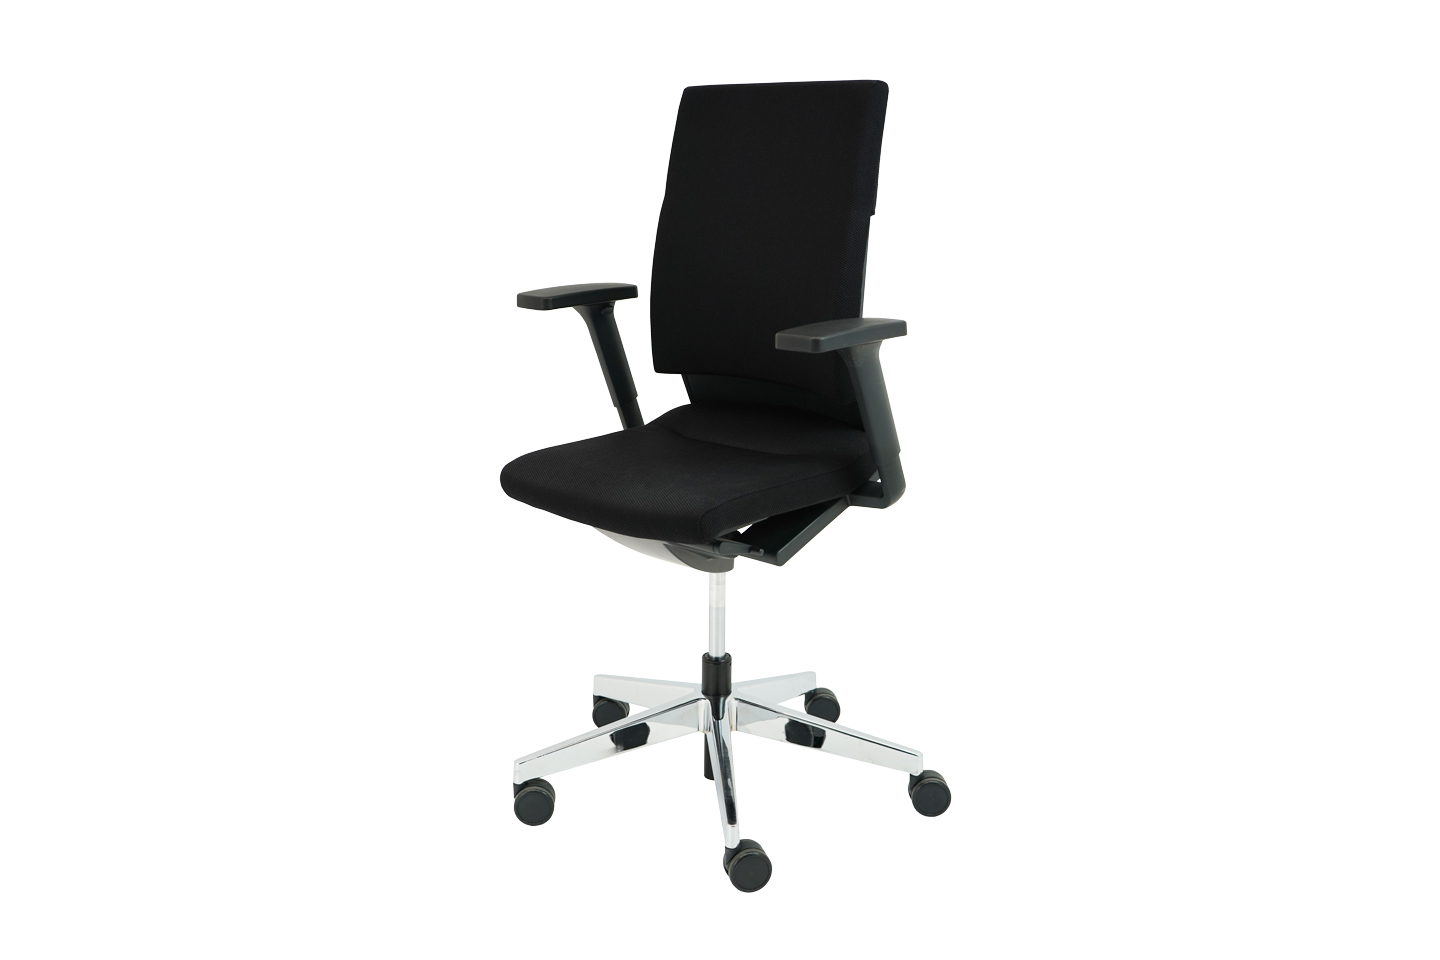 Wilkhahn Office swivel chair 181/71 Neos Fabric / Black | Office swivel  chairs | Chairs | Products | English